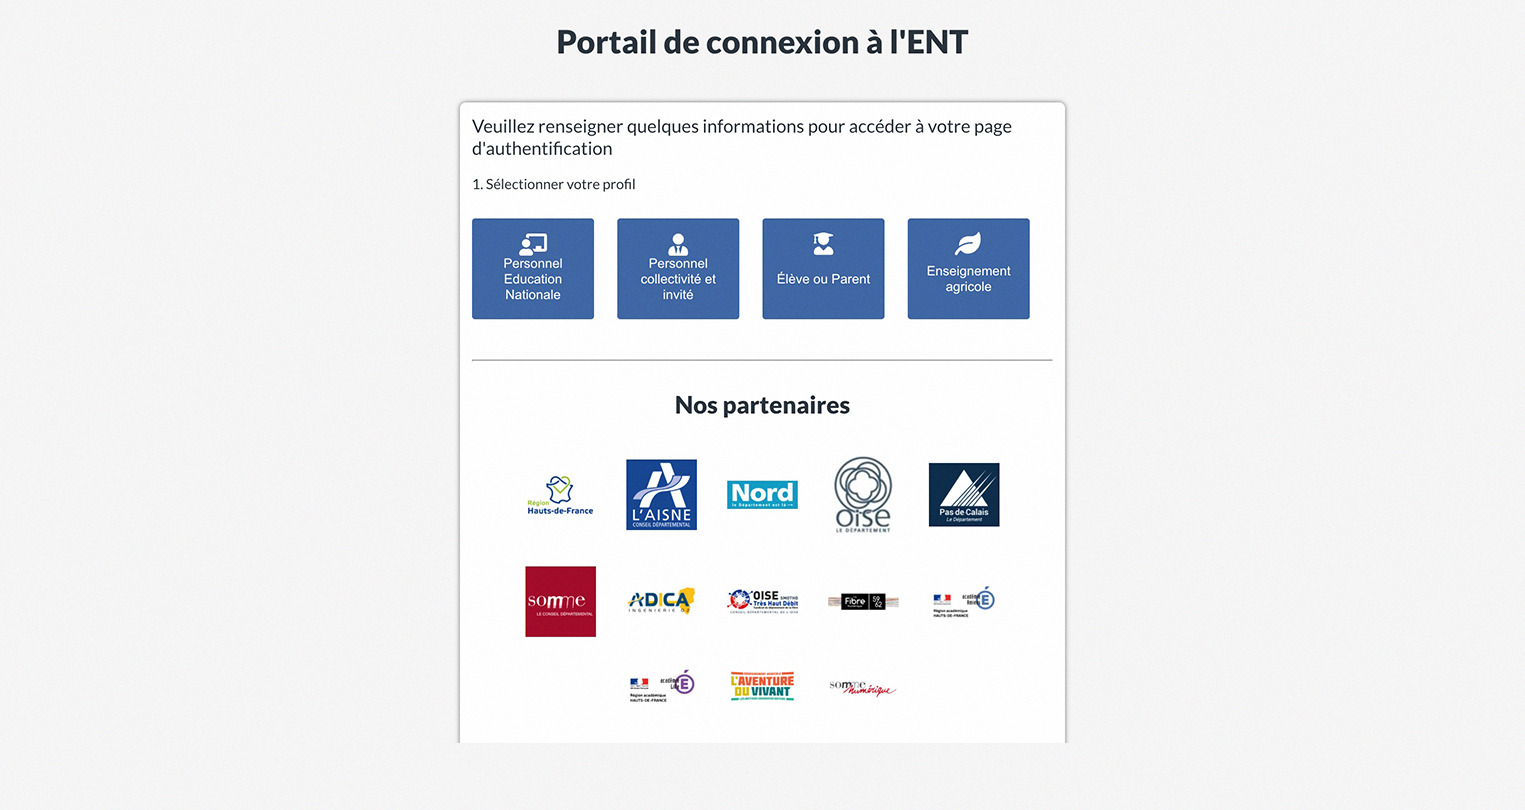 ENTHDF Guide: Accessing my Hauts-de-France Digital Workspace online